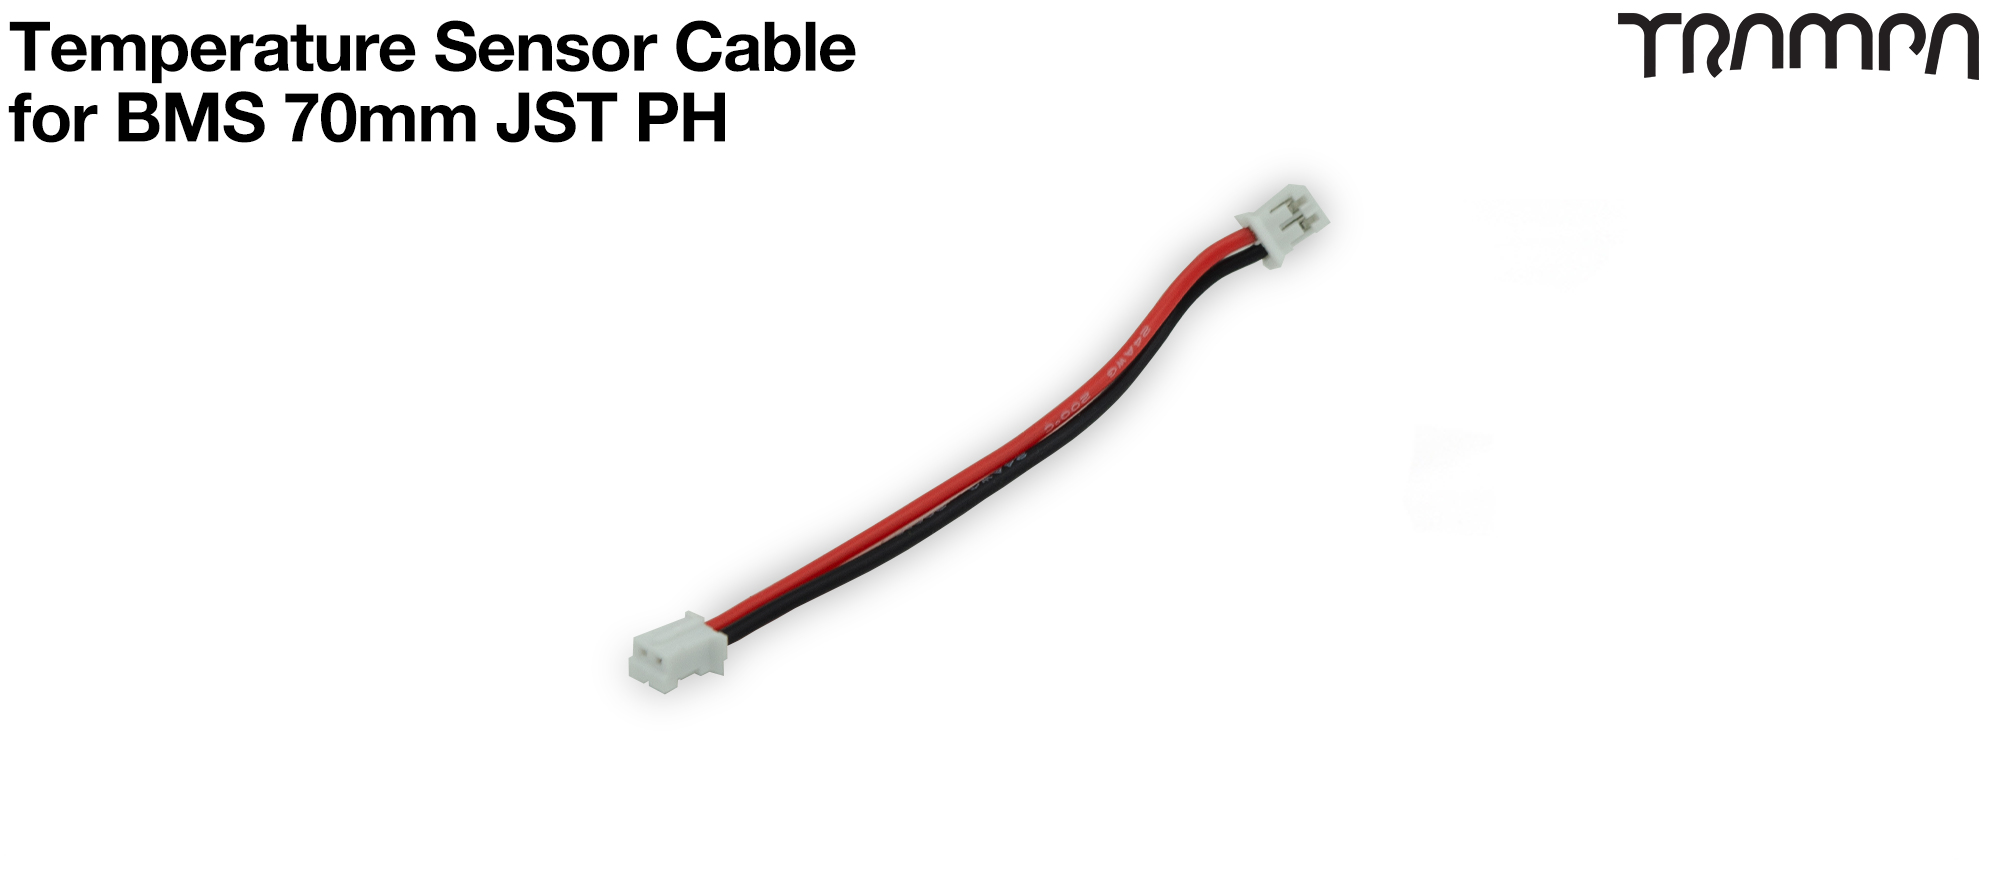 Temp Sensor cable for BMS 70mm JST PH